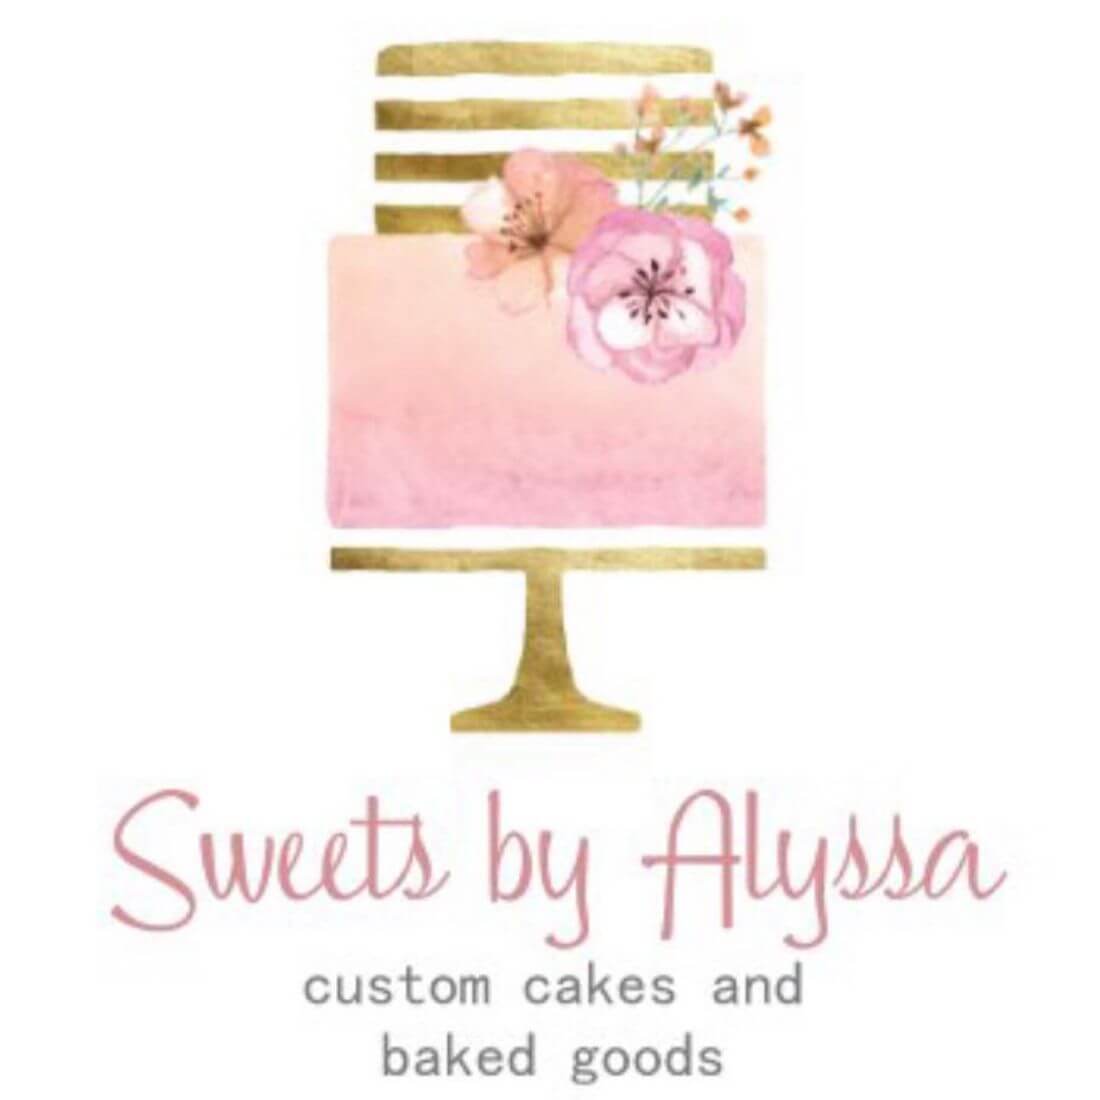 sweets-by-alyssa-logo